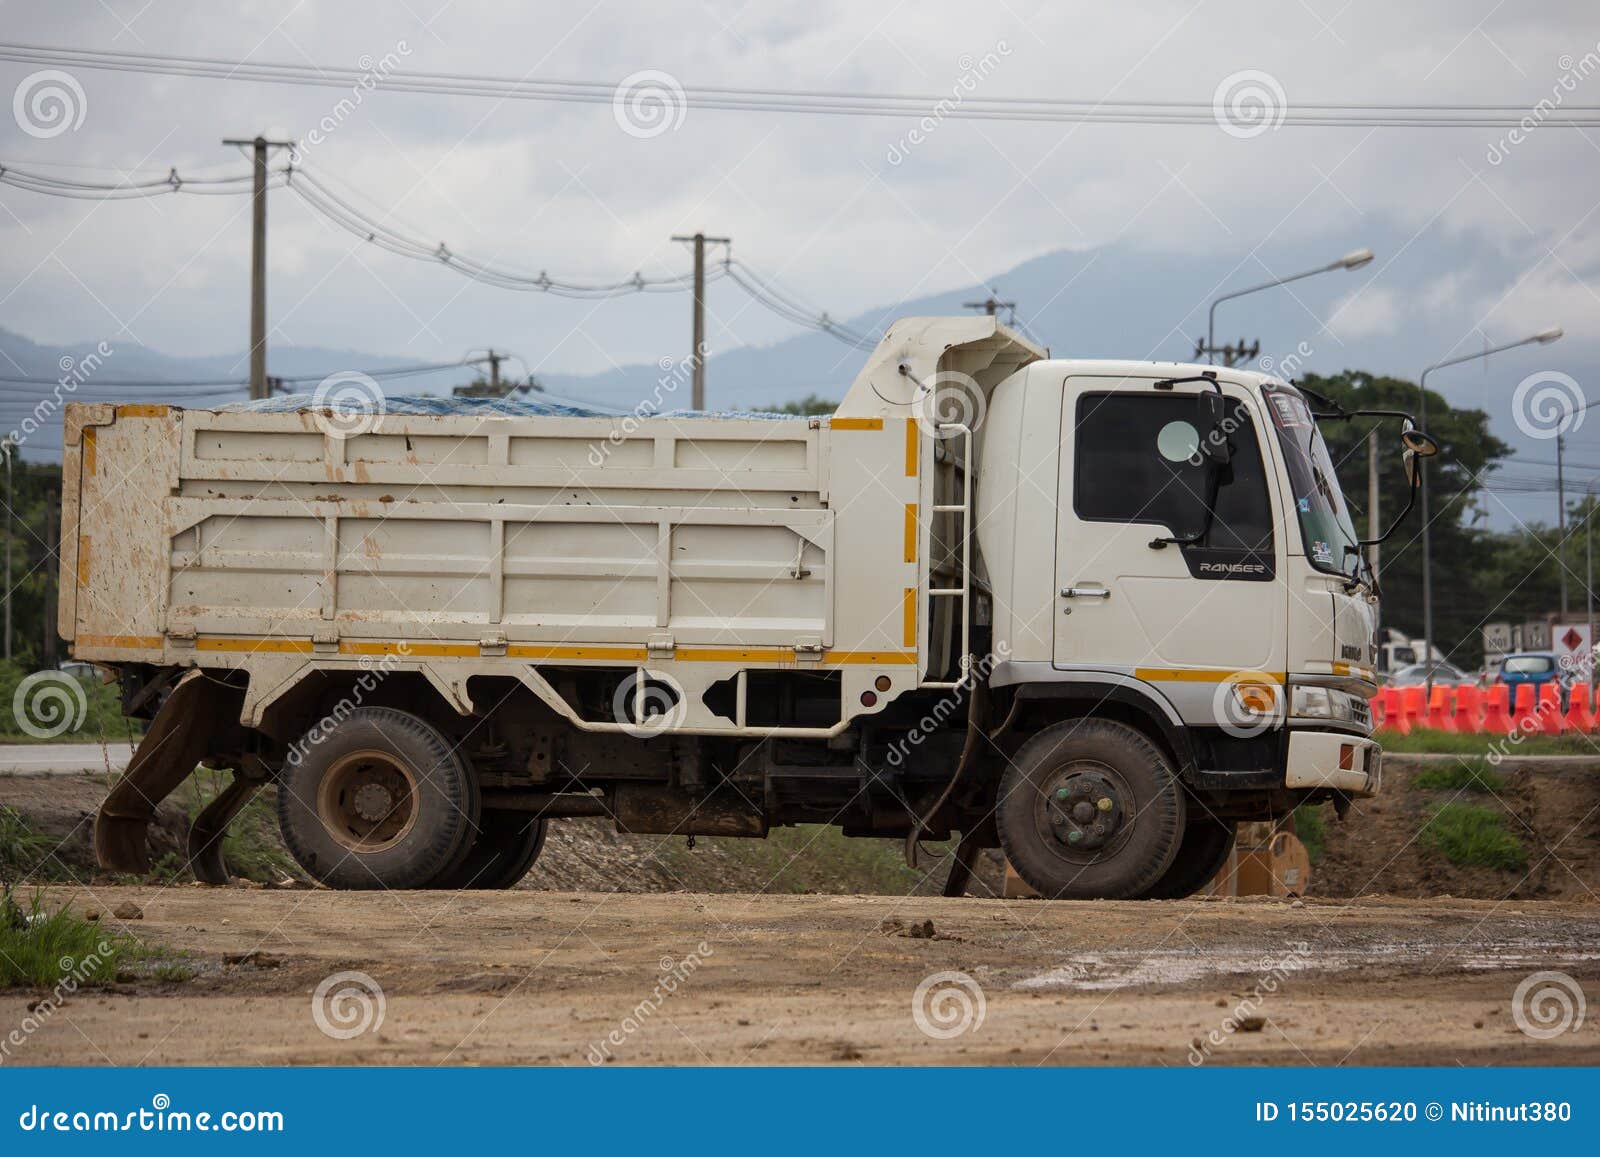 Private Hino Dump Truck  editorial image Image of cargo 